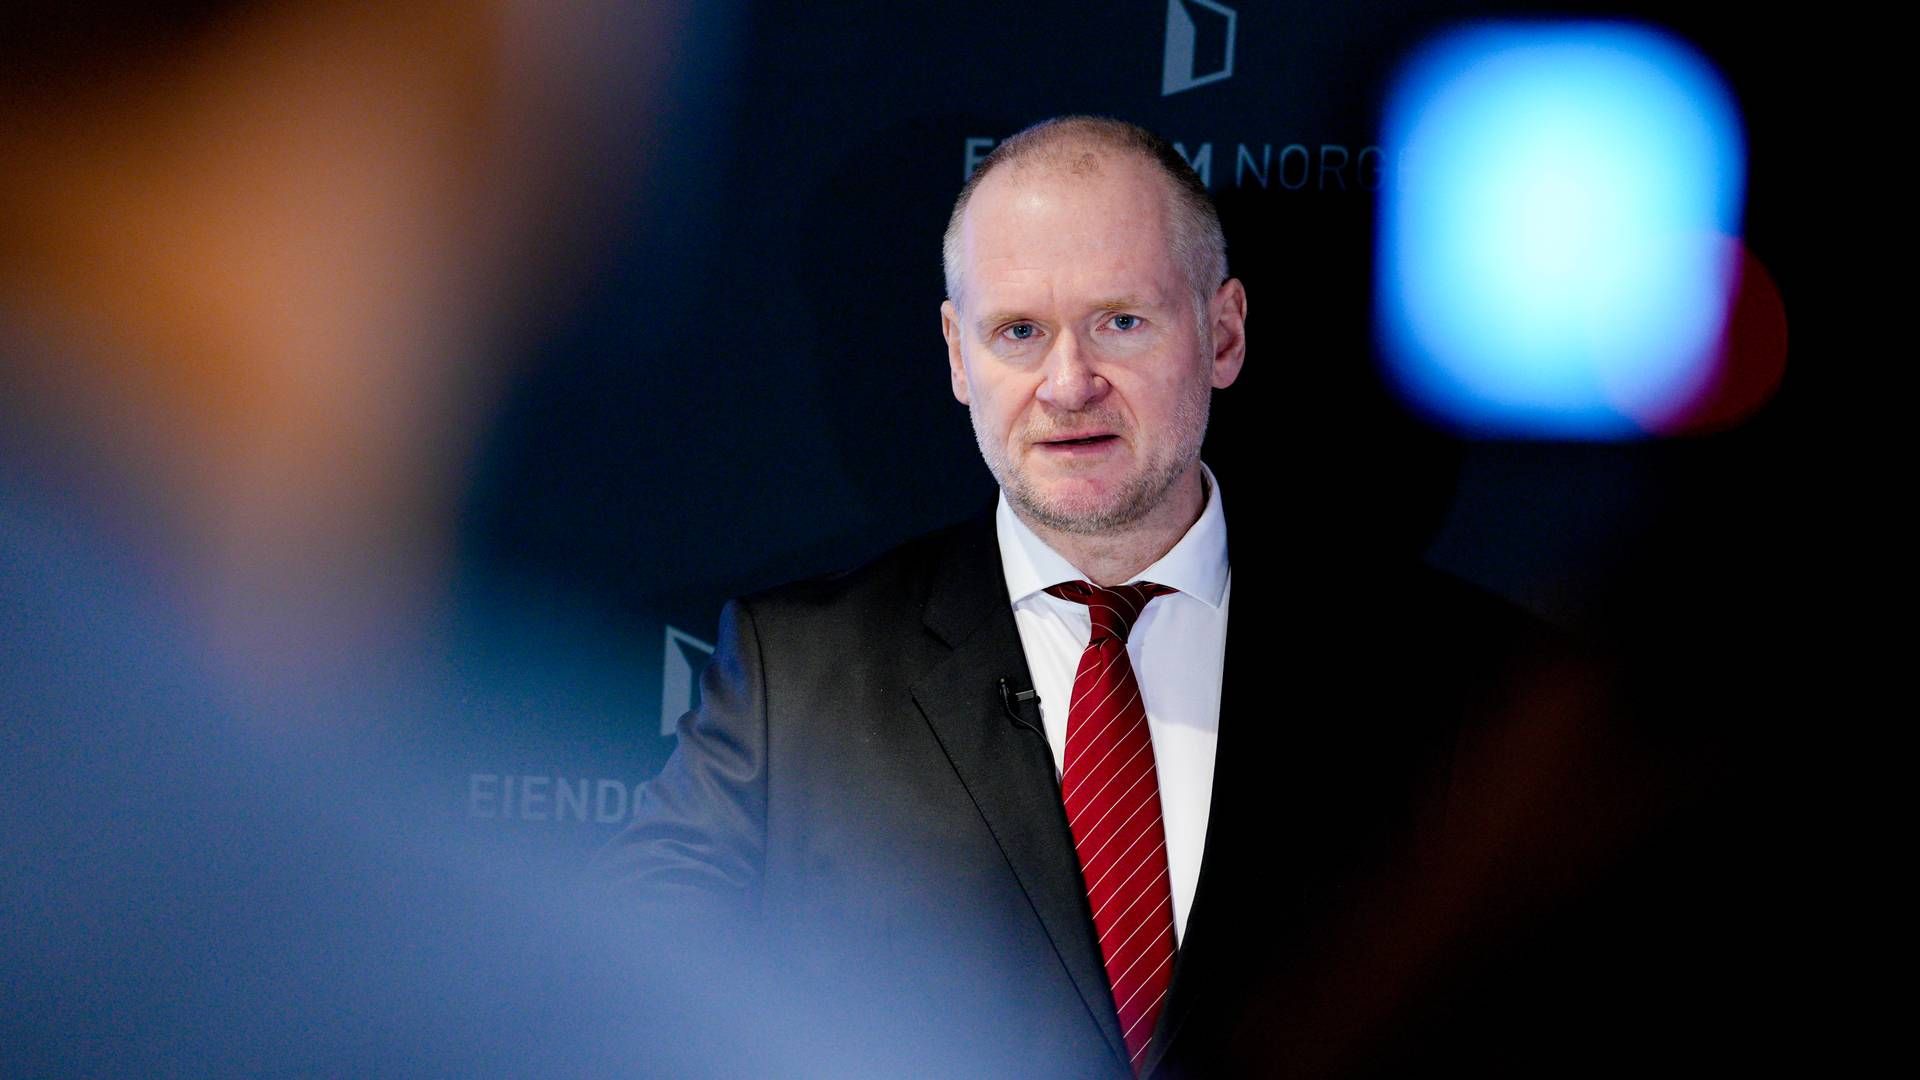 Administrerende direktør Henning Lauridsen i Eiendom Norge. | Foto: Javad Parsa / NTB